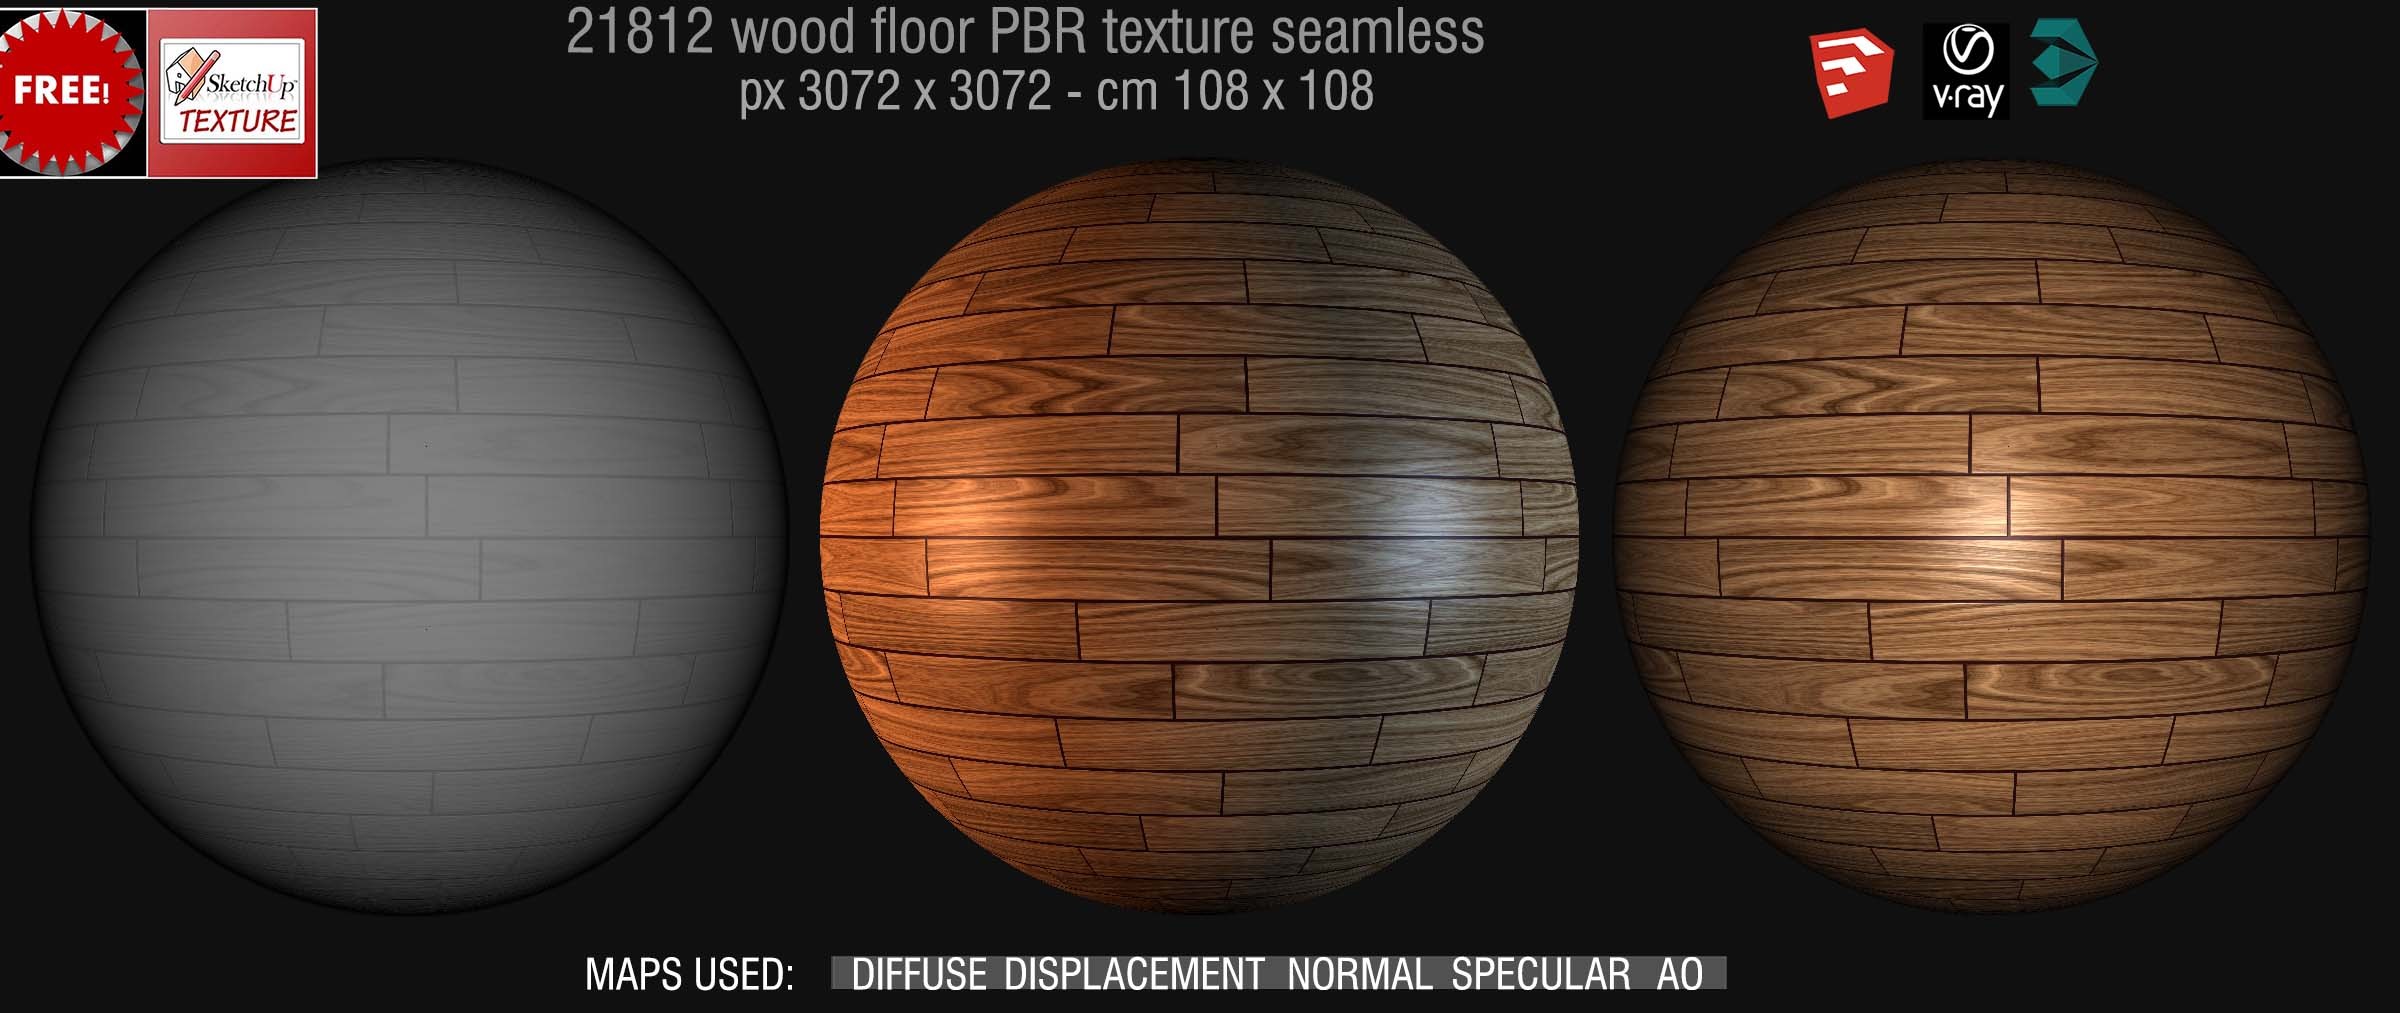 21812 Wood floor PBR texture seamless DEMO